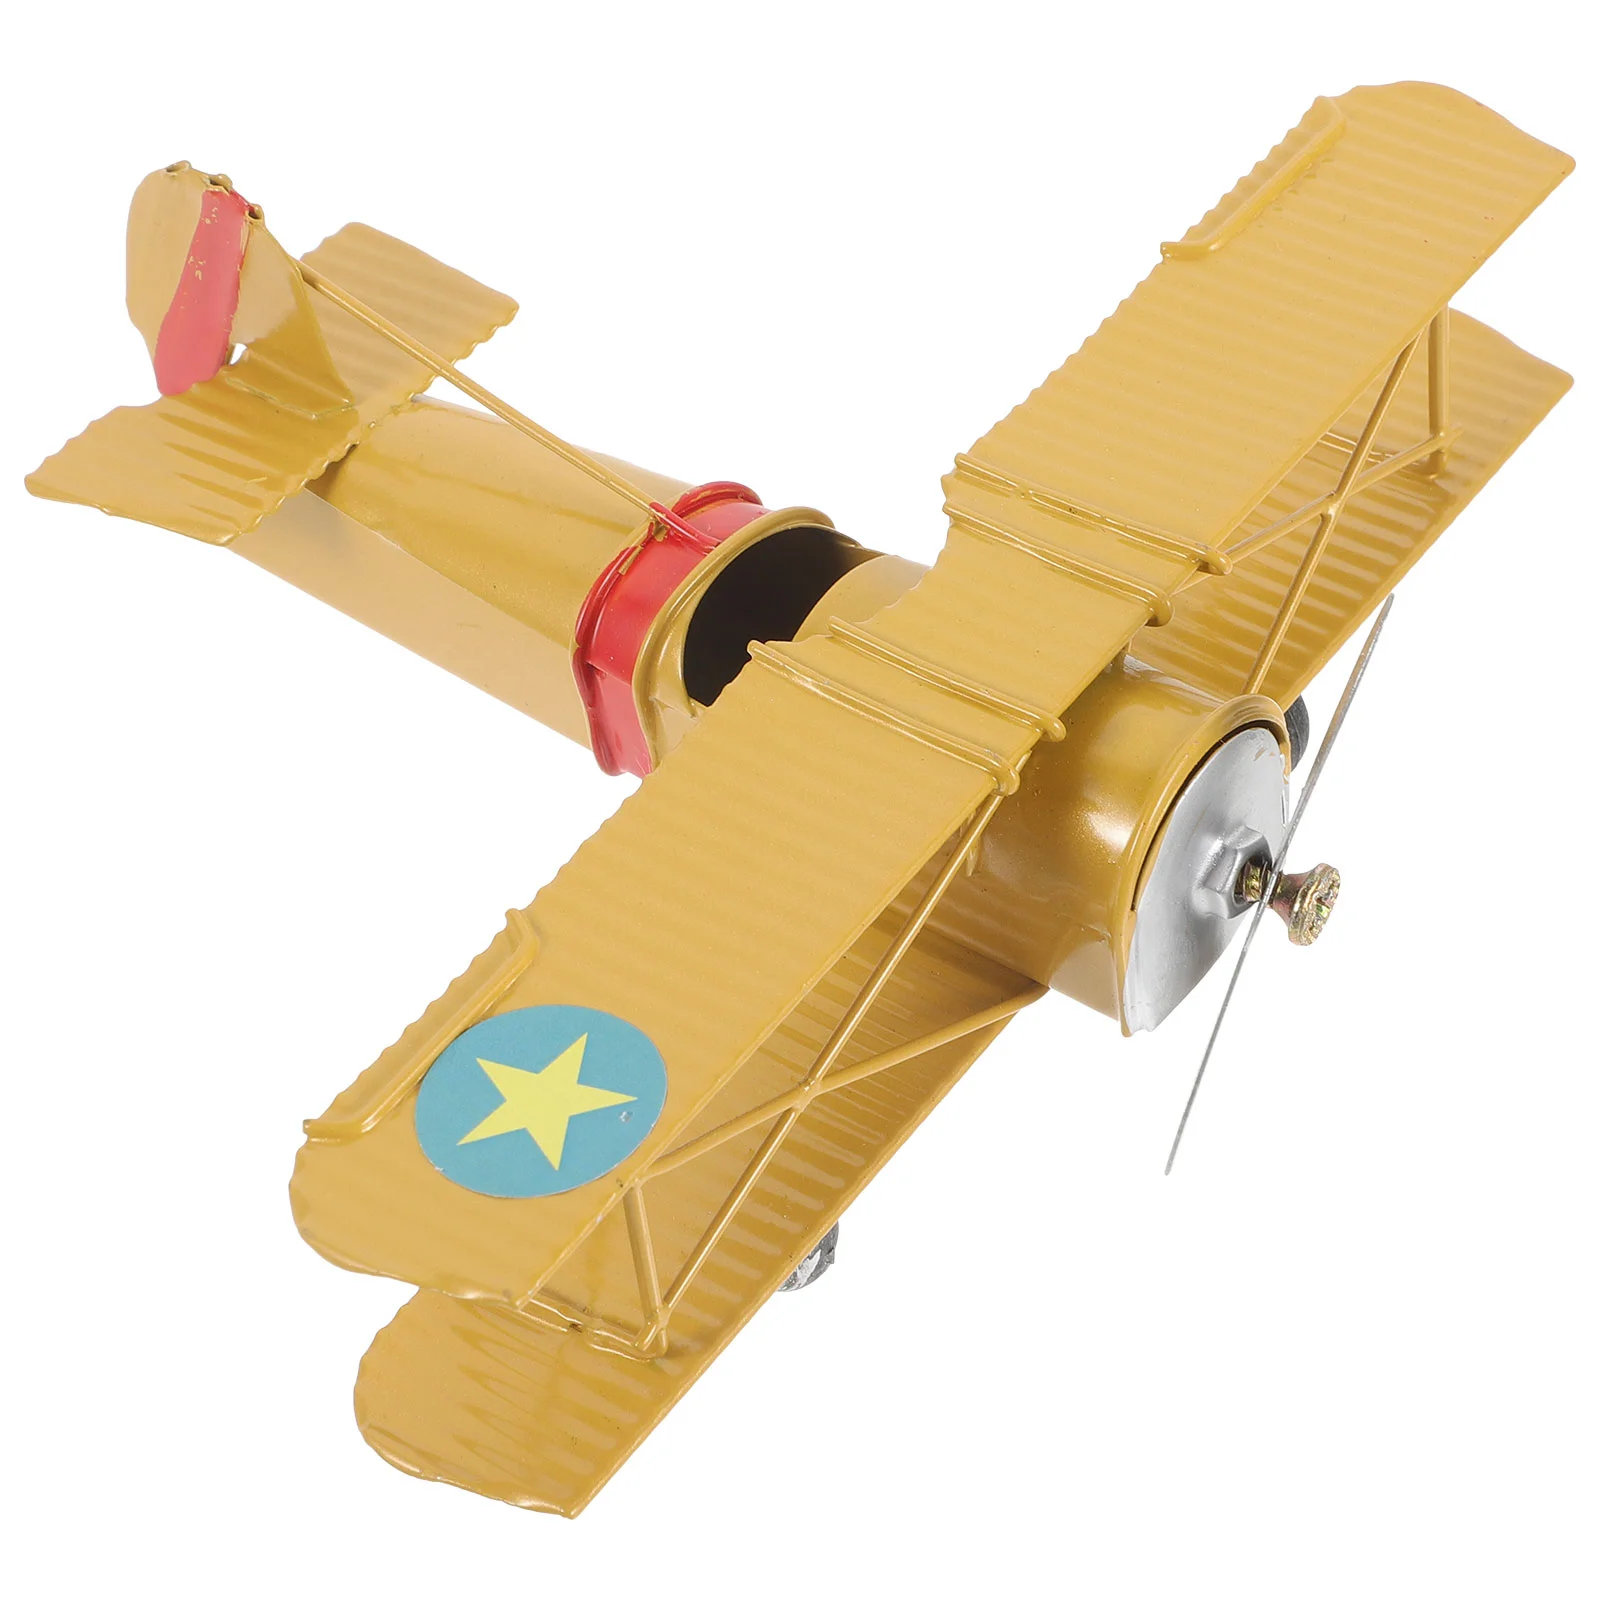 

Airplane Model Retro Models Iron Miniature Glider Ornament Creative Decor Decors Aeroplane Second world war